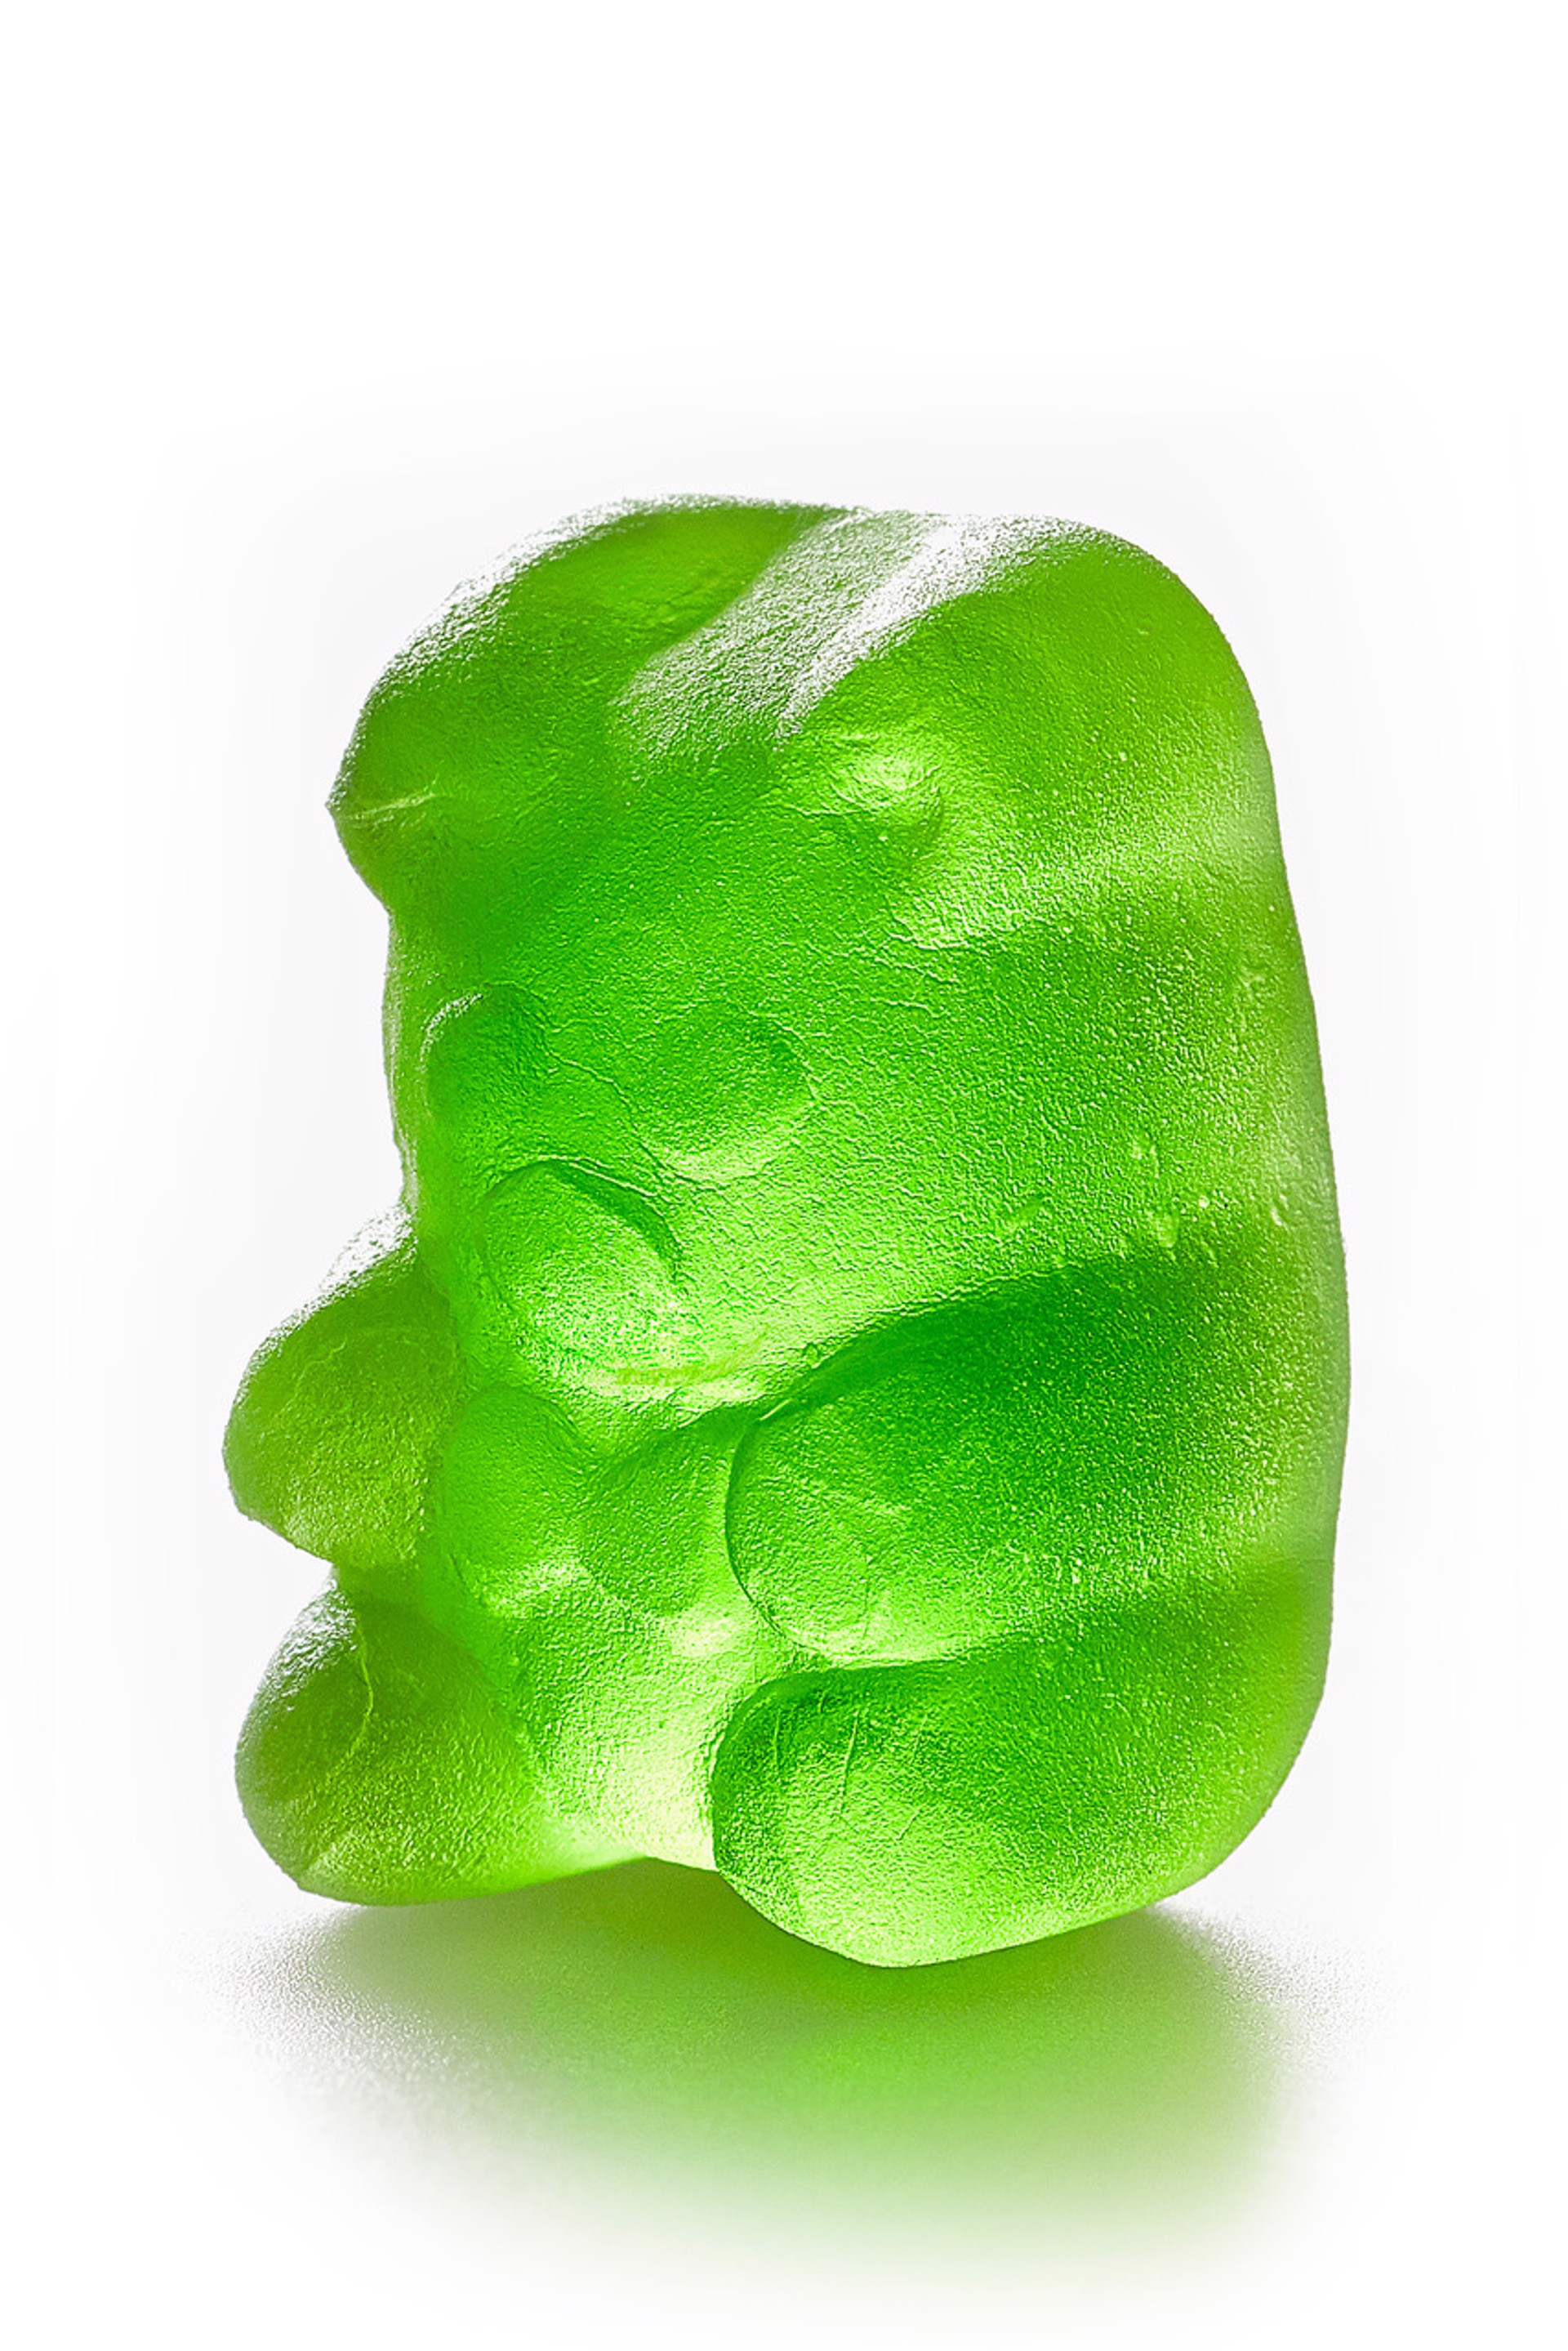 Gummie Bear - Green by Peter Andrew Lusztyk / Refined Sugar